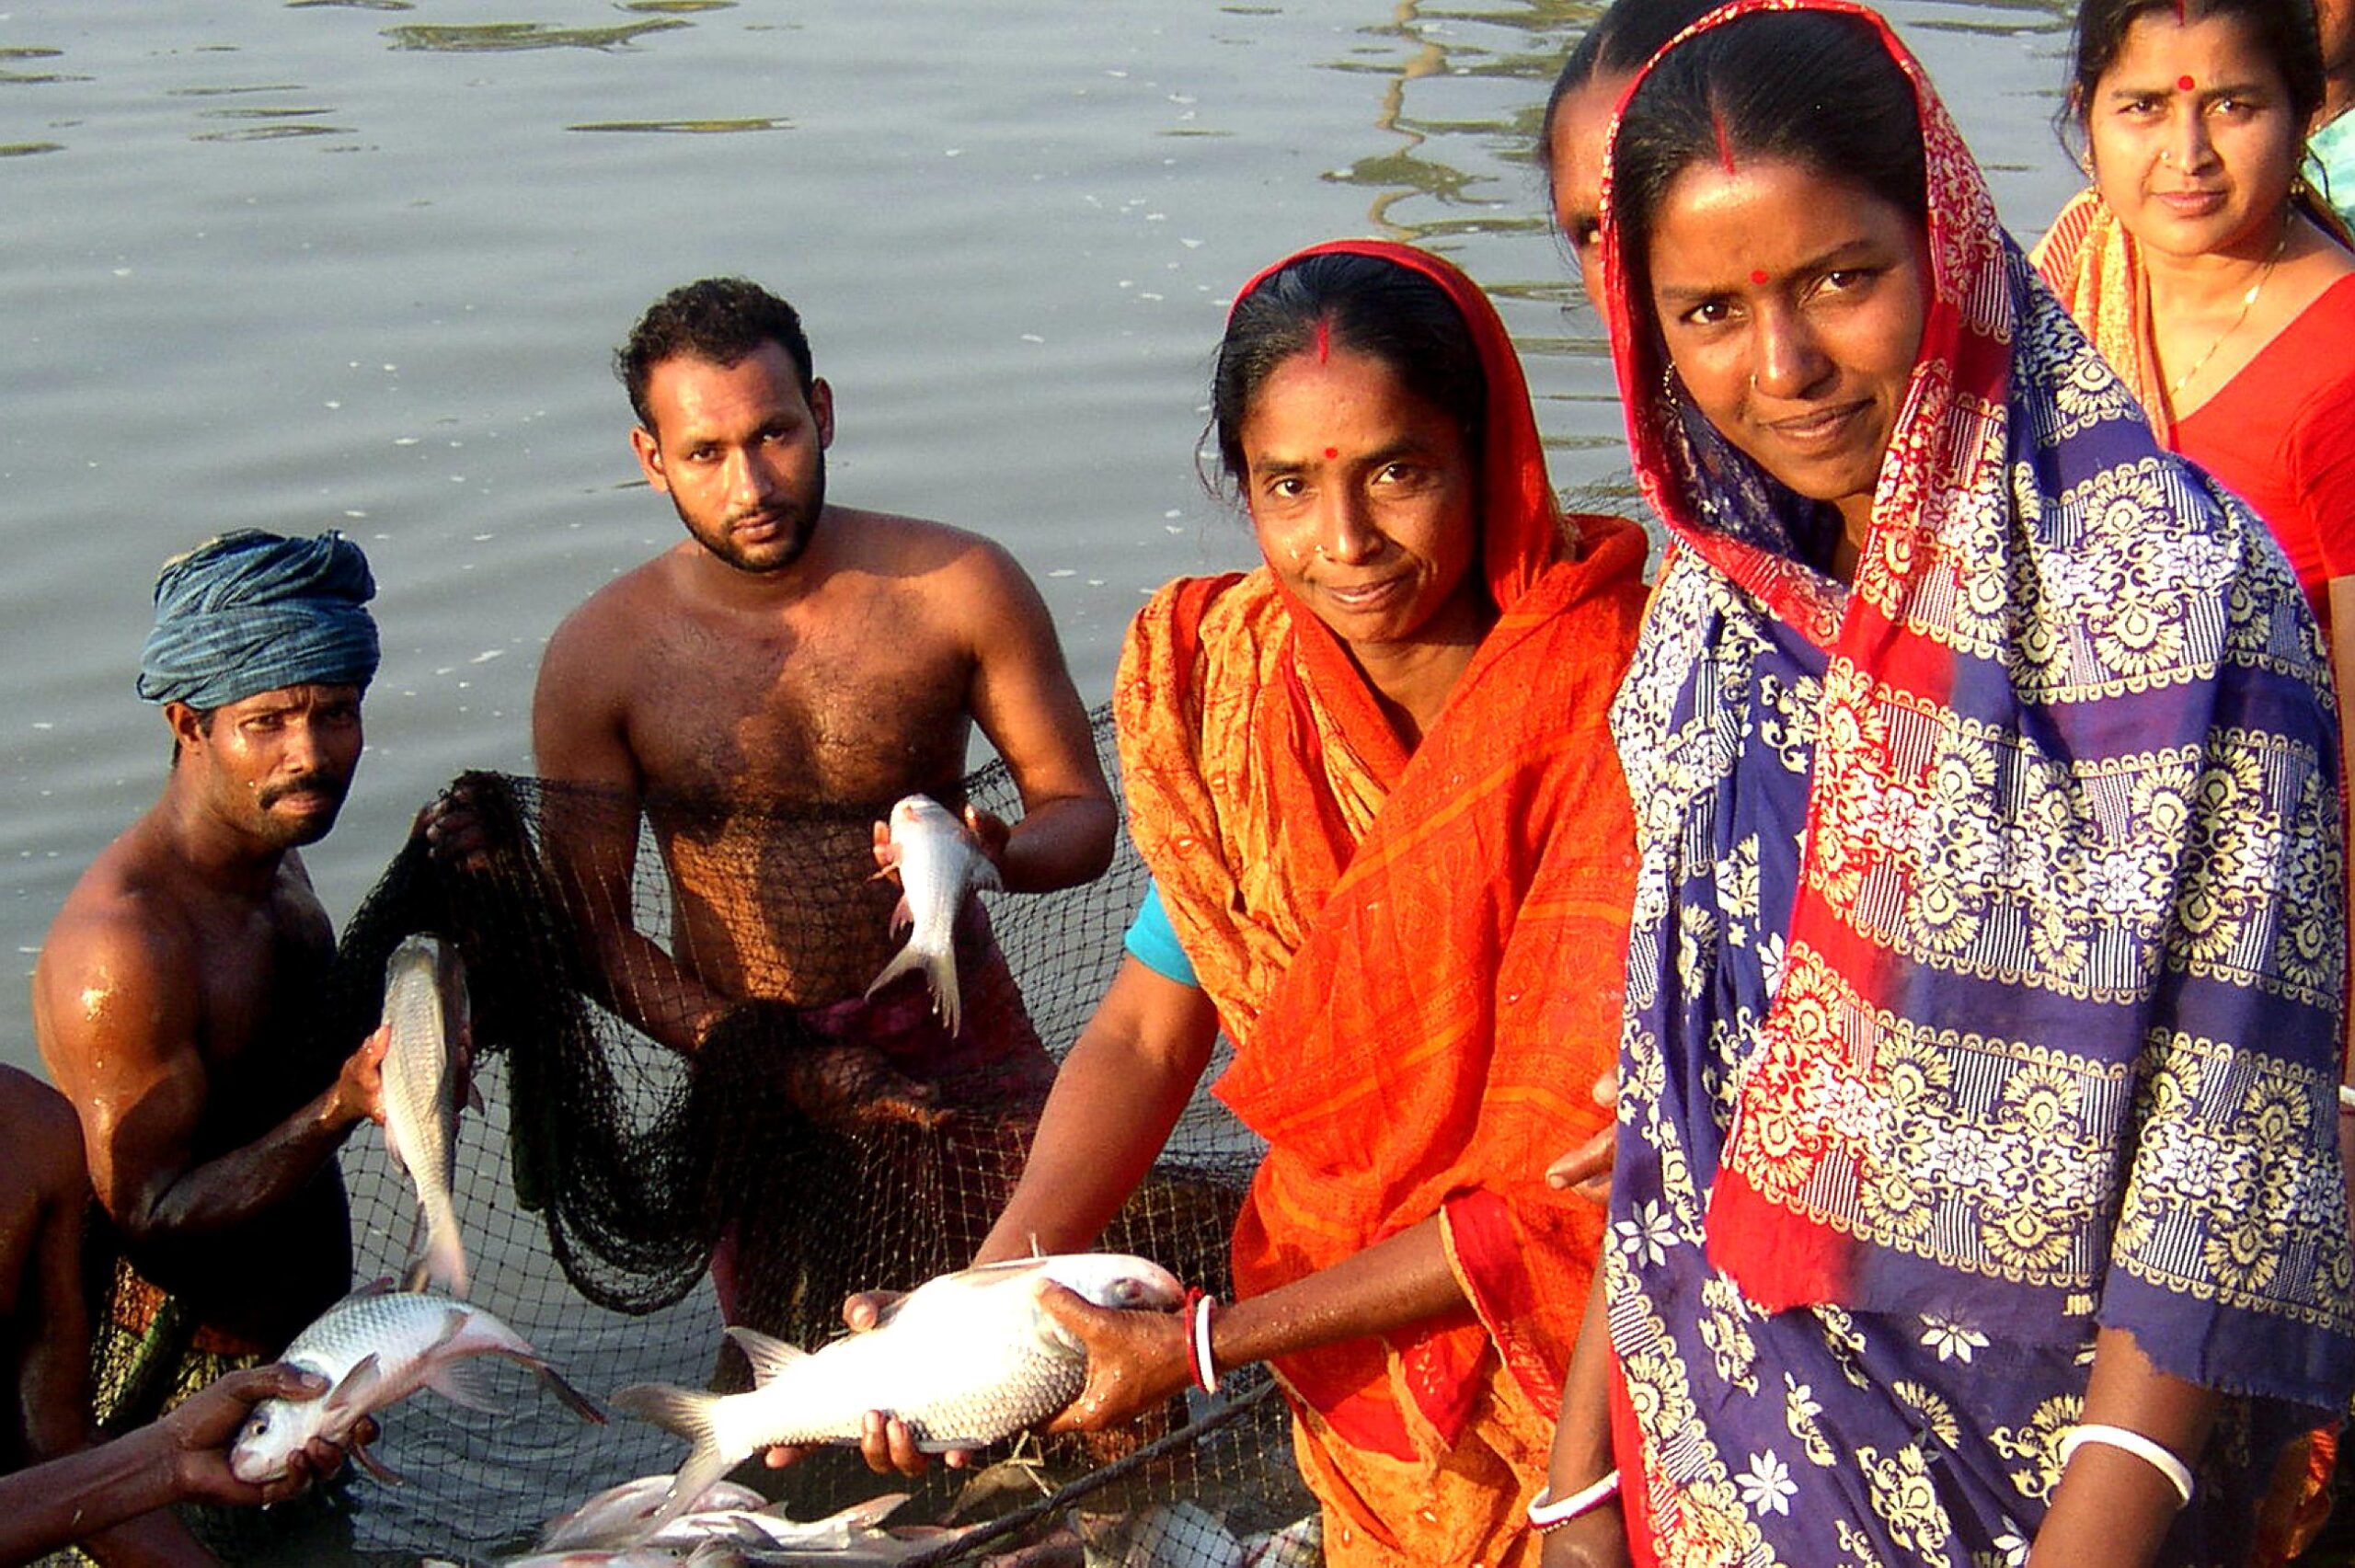 Bangladesh people fishing